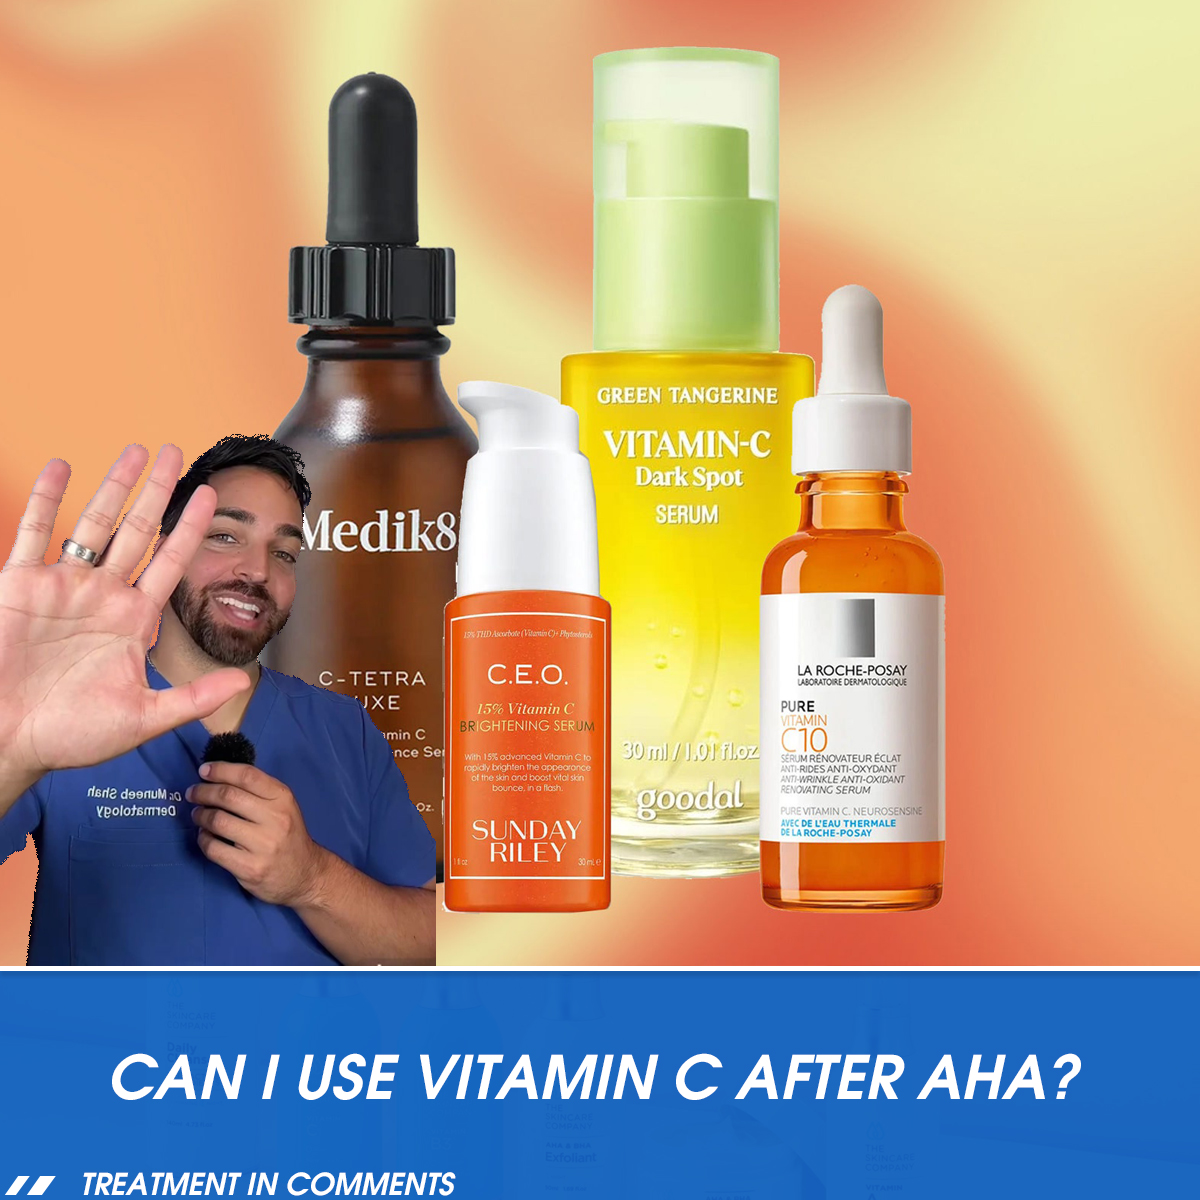 Can I use vitamin C after AHA?